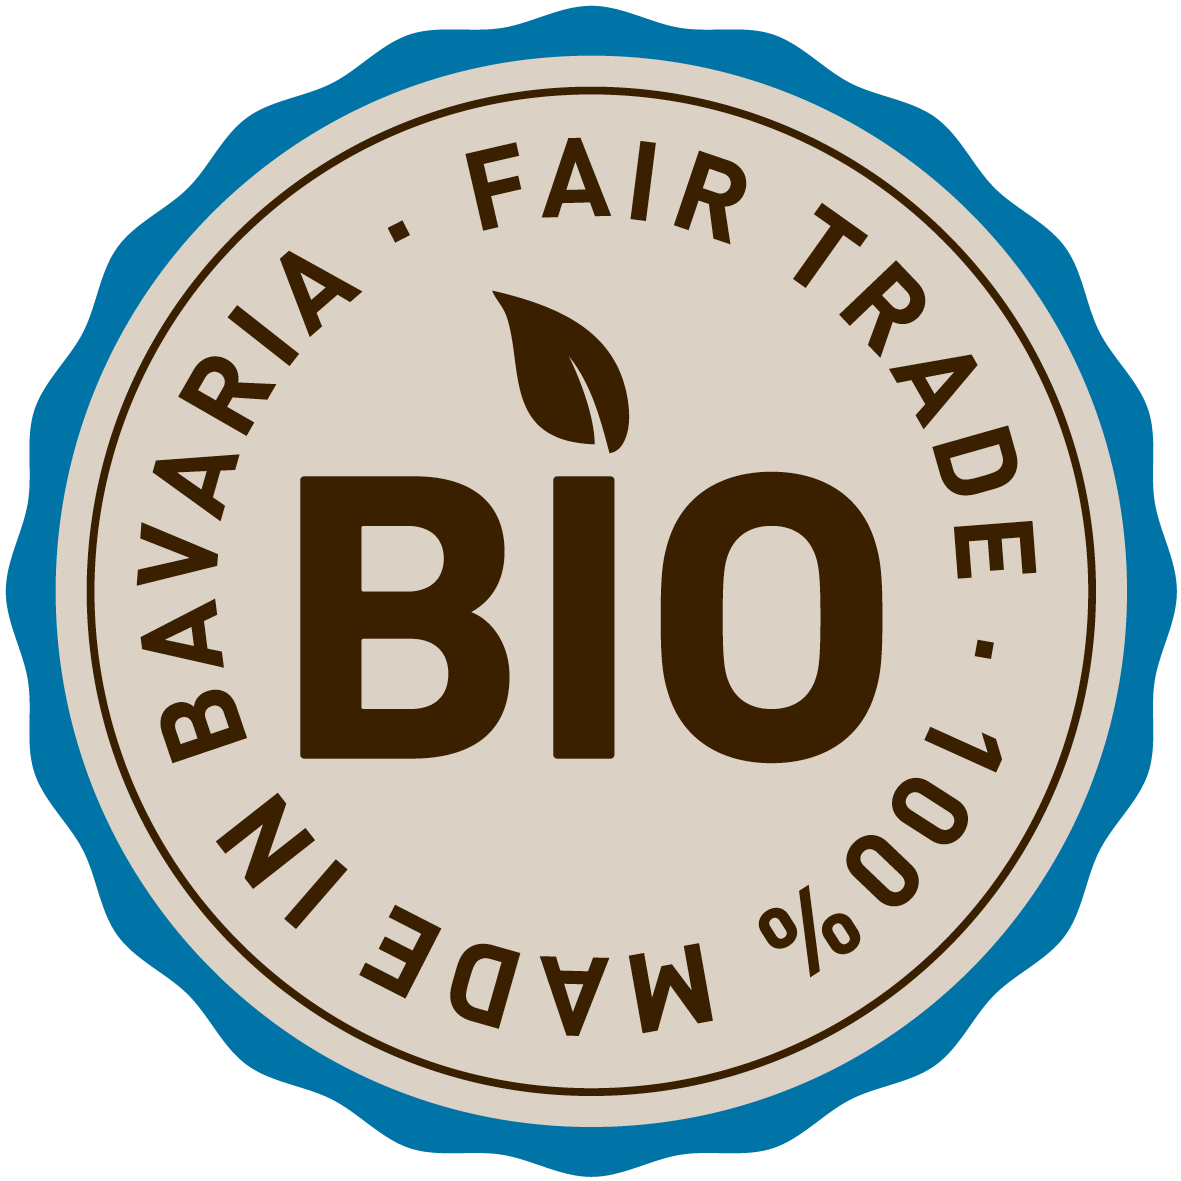 Bio Kletterhose, Fair Trade Kletterhose, Faire Kletterhose, nachhaltige Kletterhose, Bio und regional, made in Germany, made in Bavaria, Fair und regional, Bayern